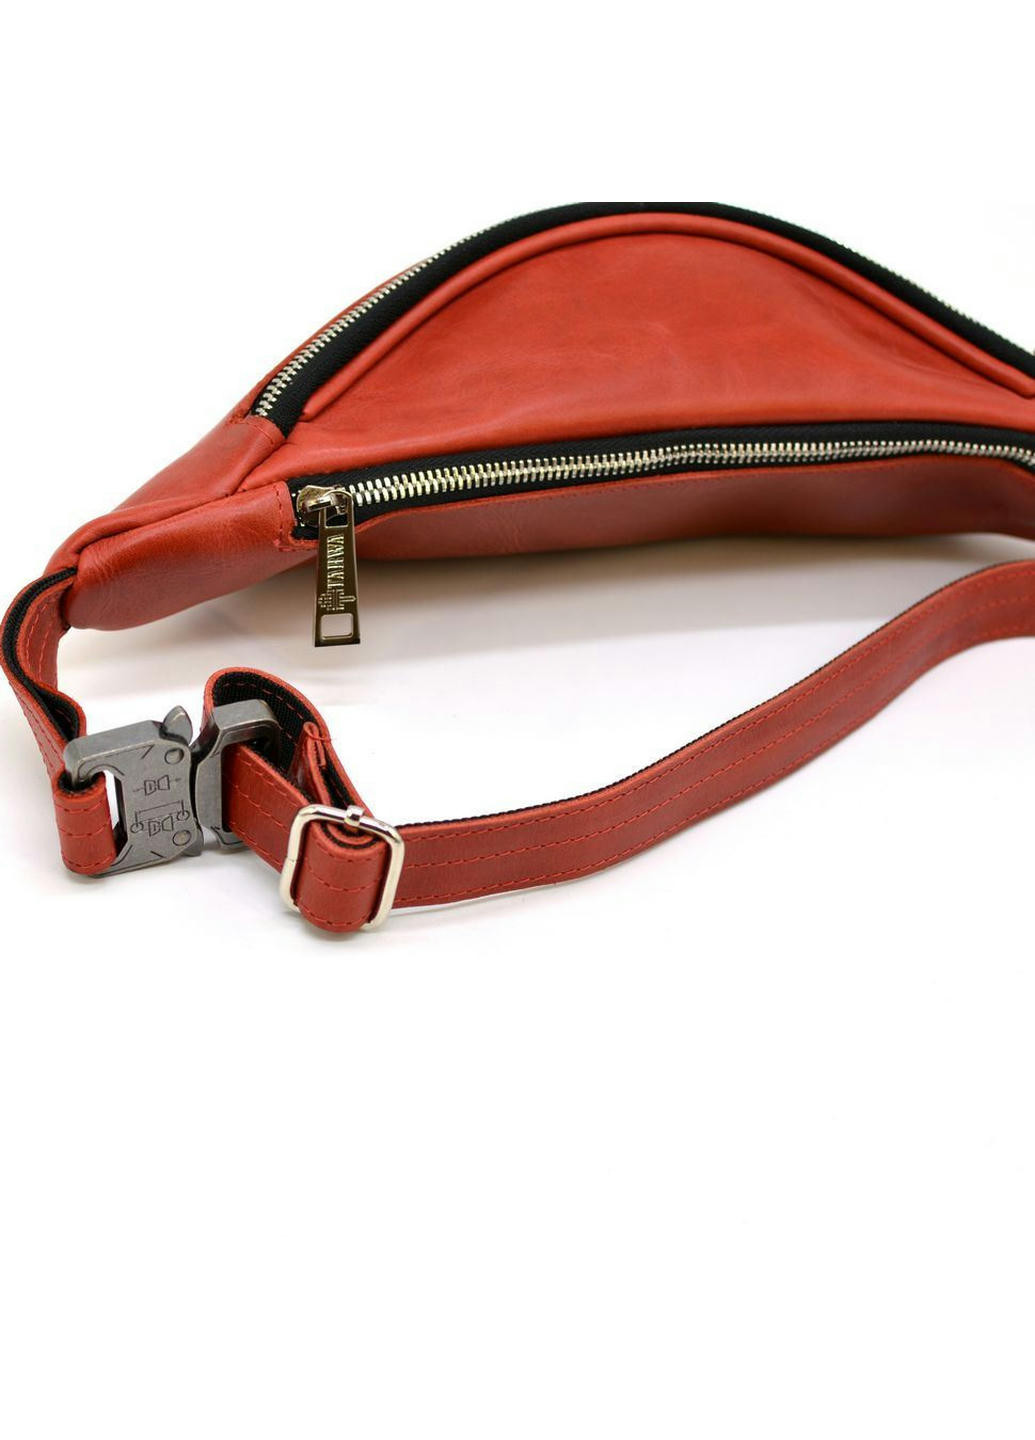 Напоясная женская сумка из натуральной кожи RR-3035-4lx бренд TARWA (257657150)